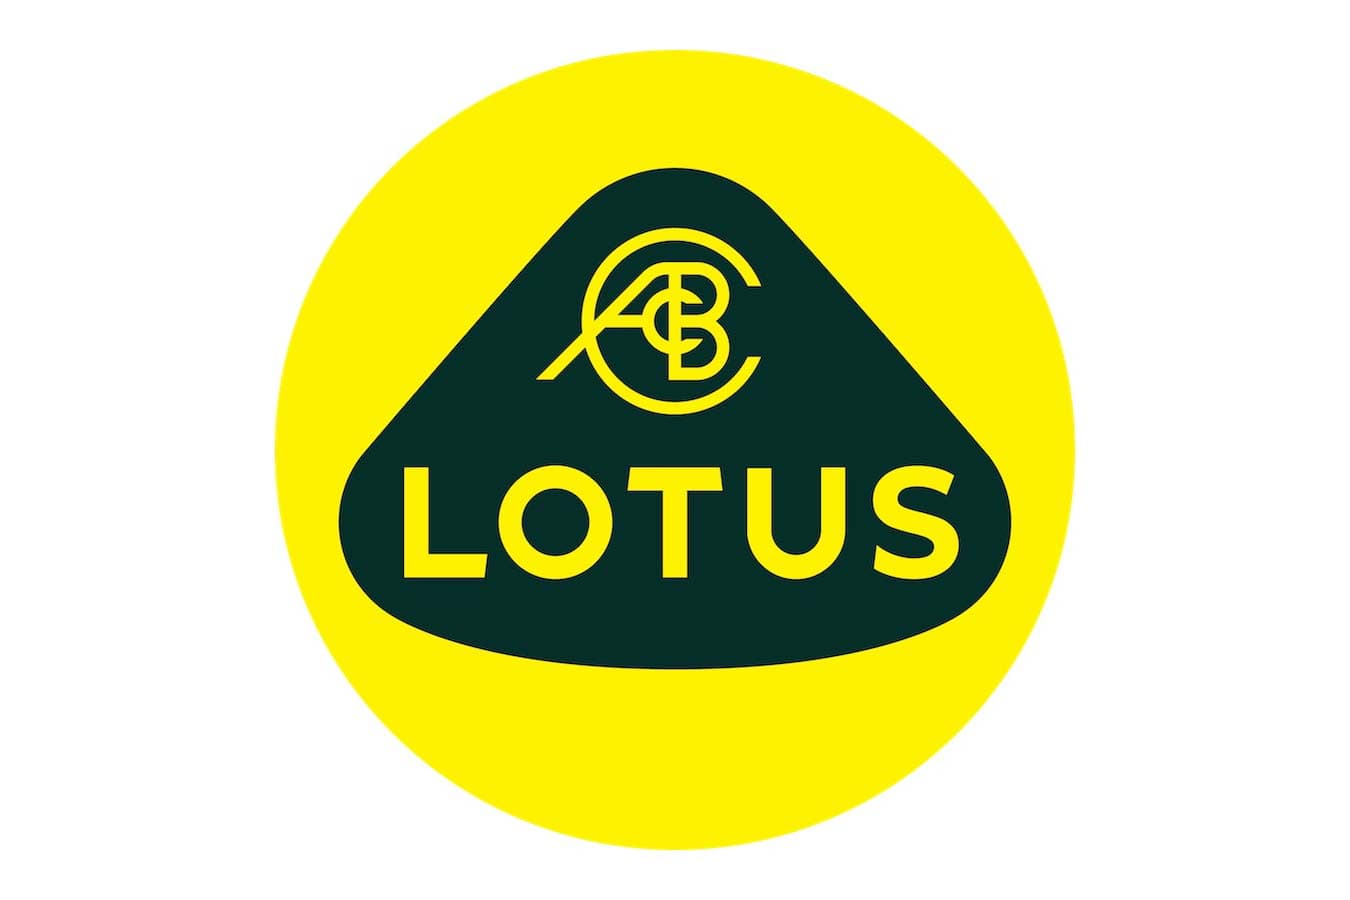 Lotus logo 2019 | The Car Expert